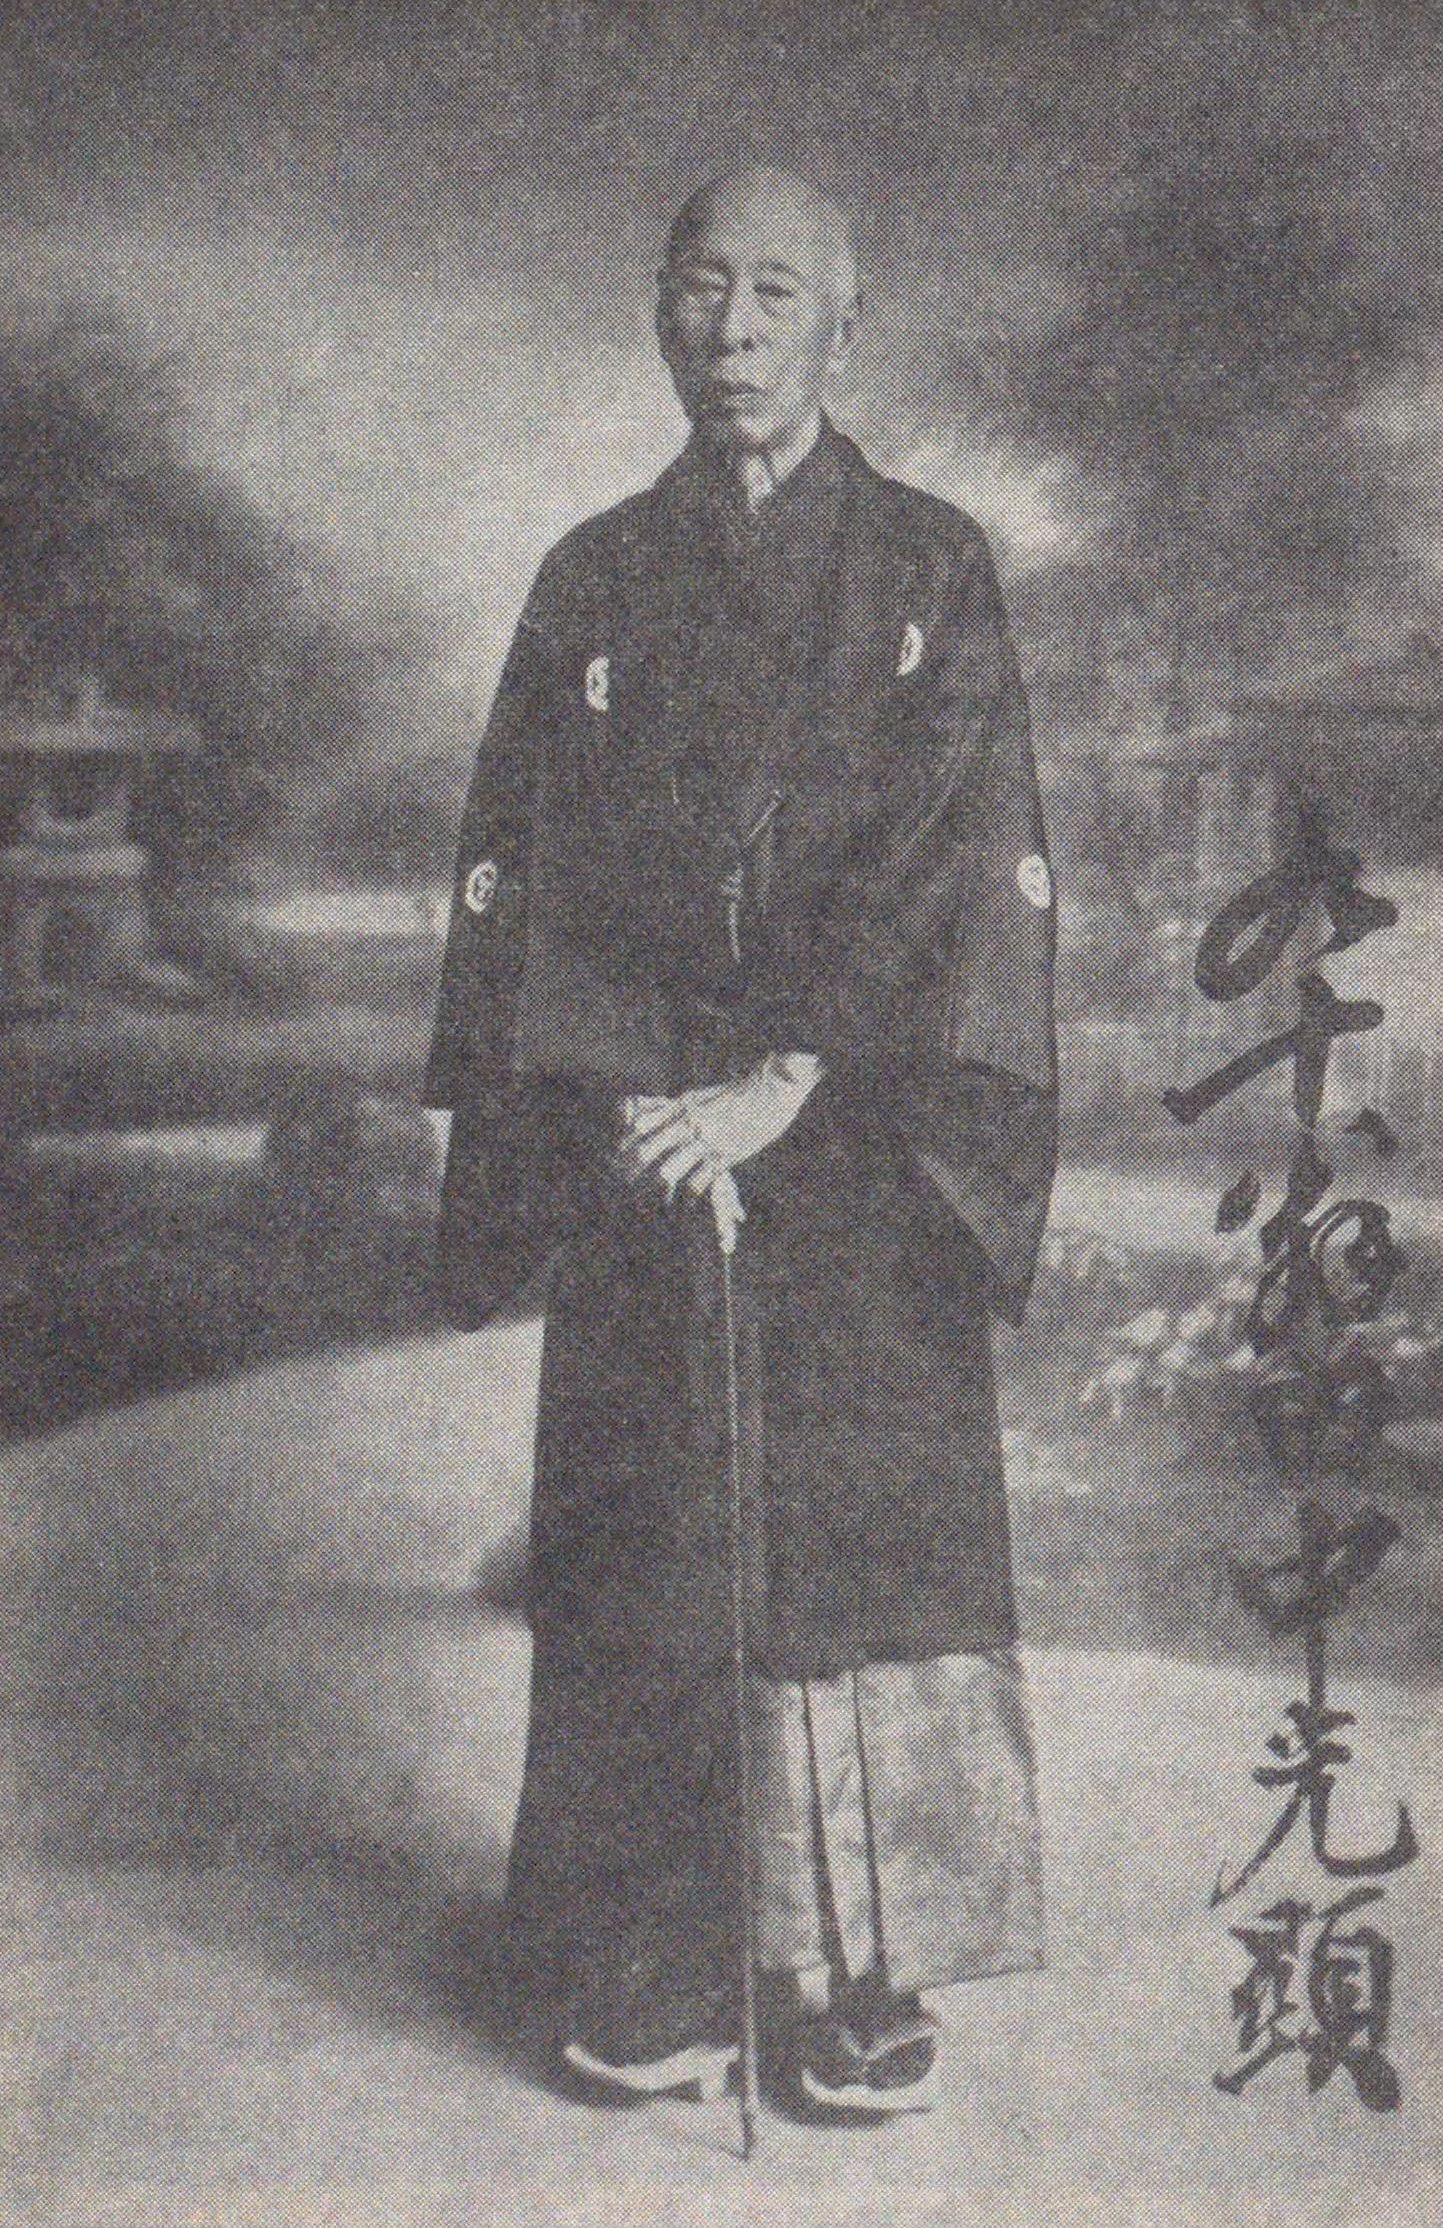 Portrait of TANAKA Mitsuaki3